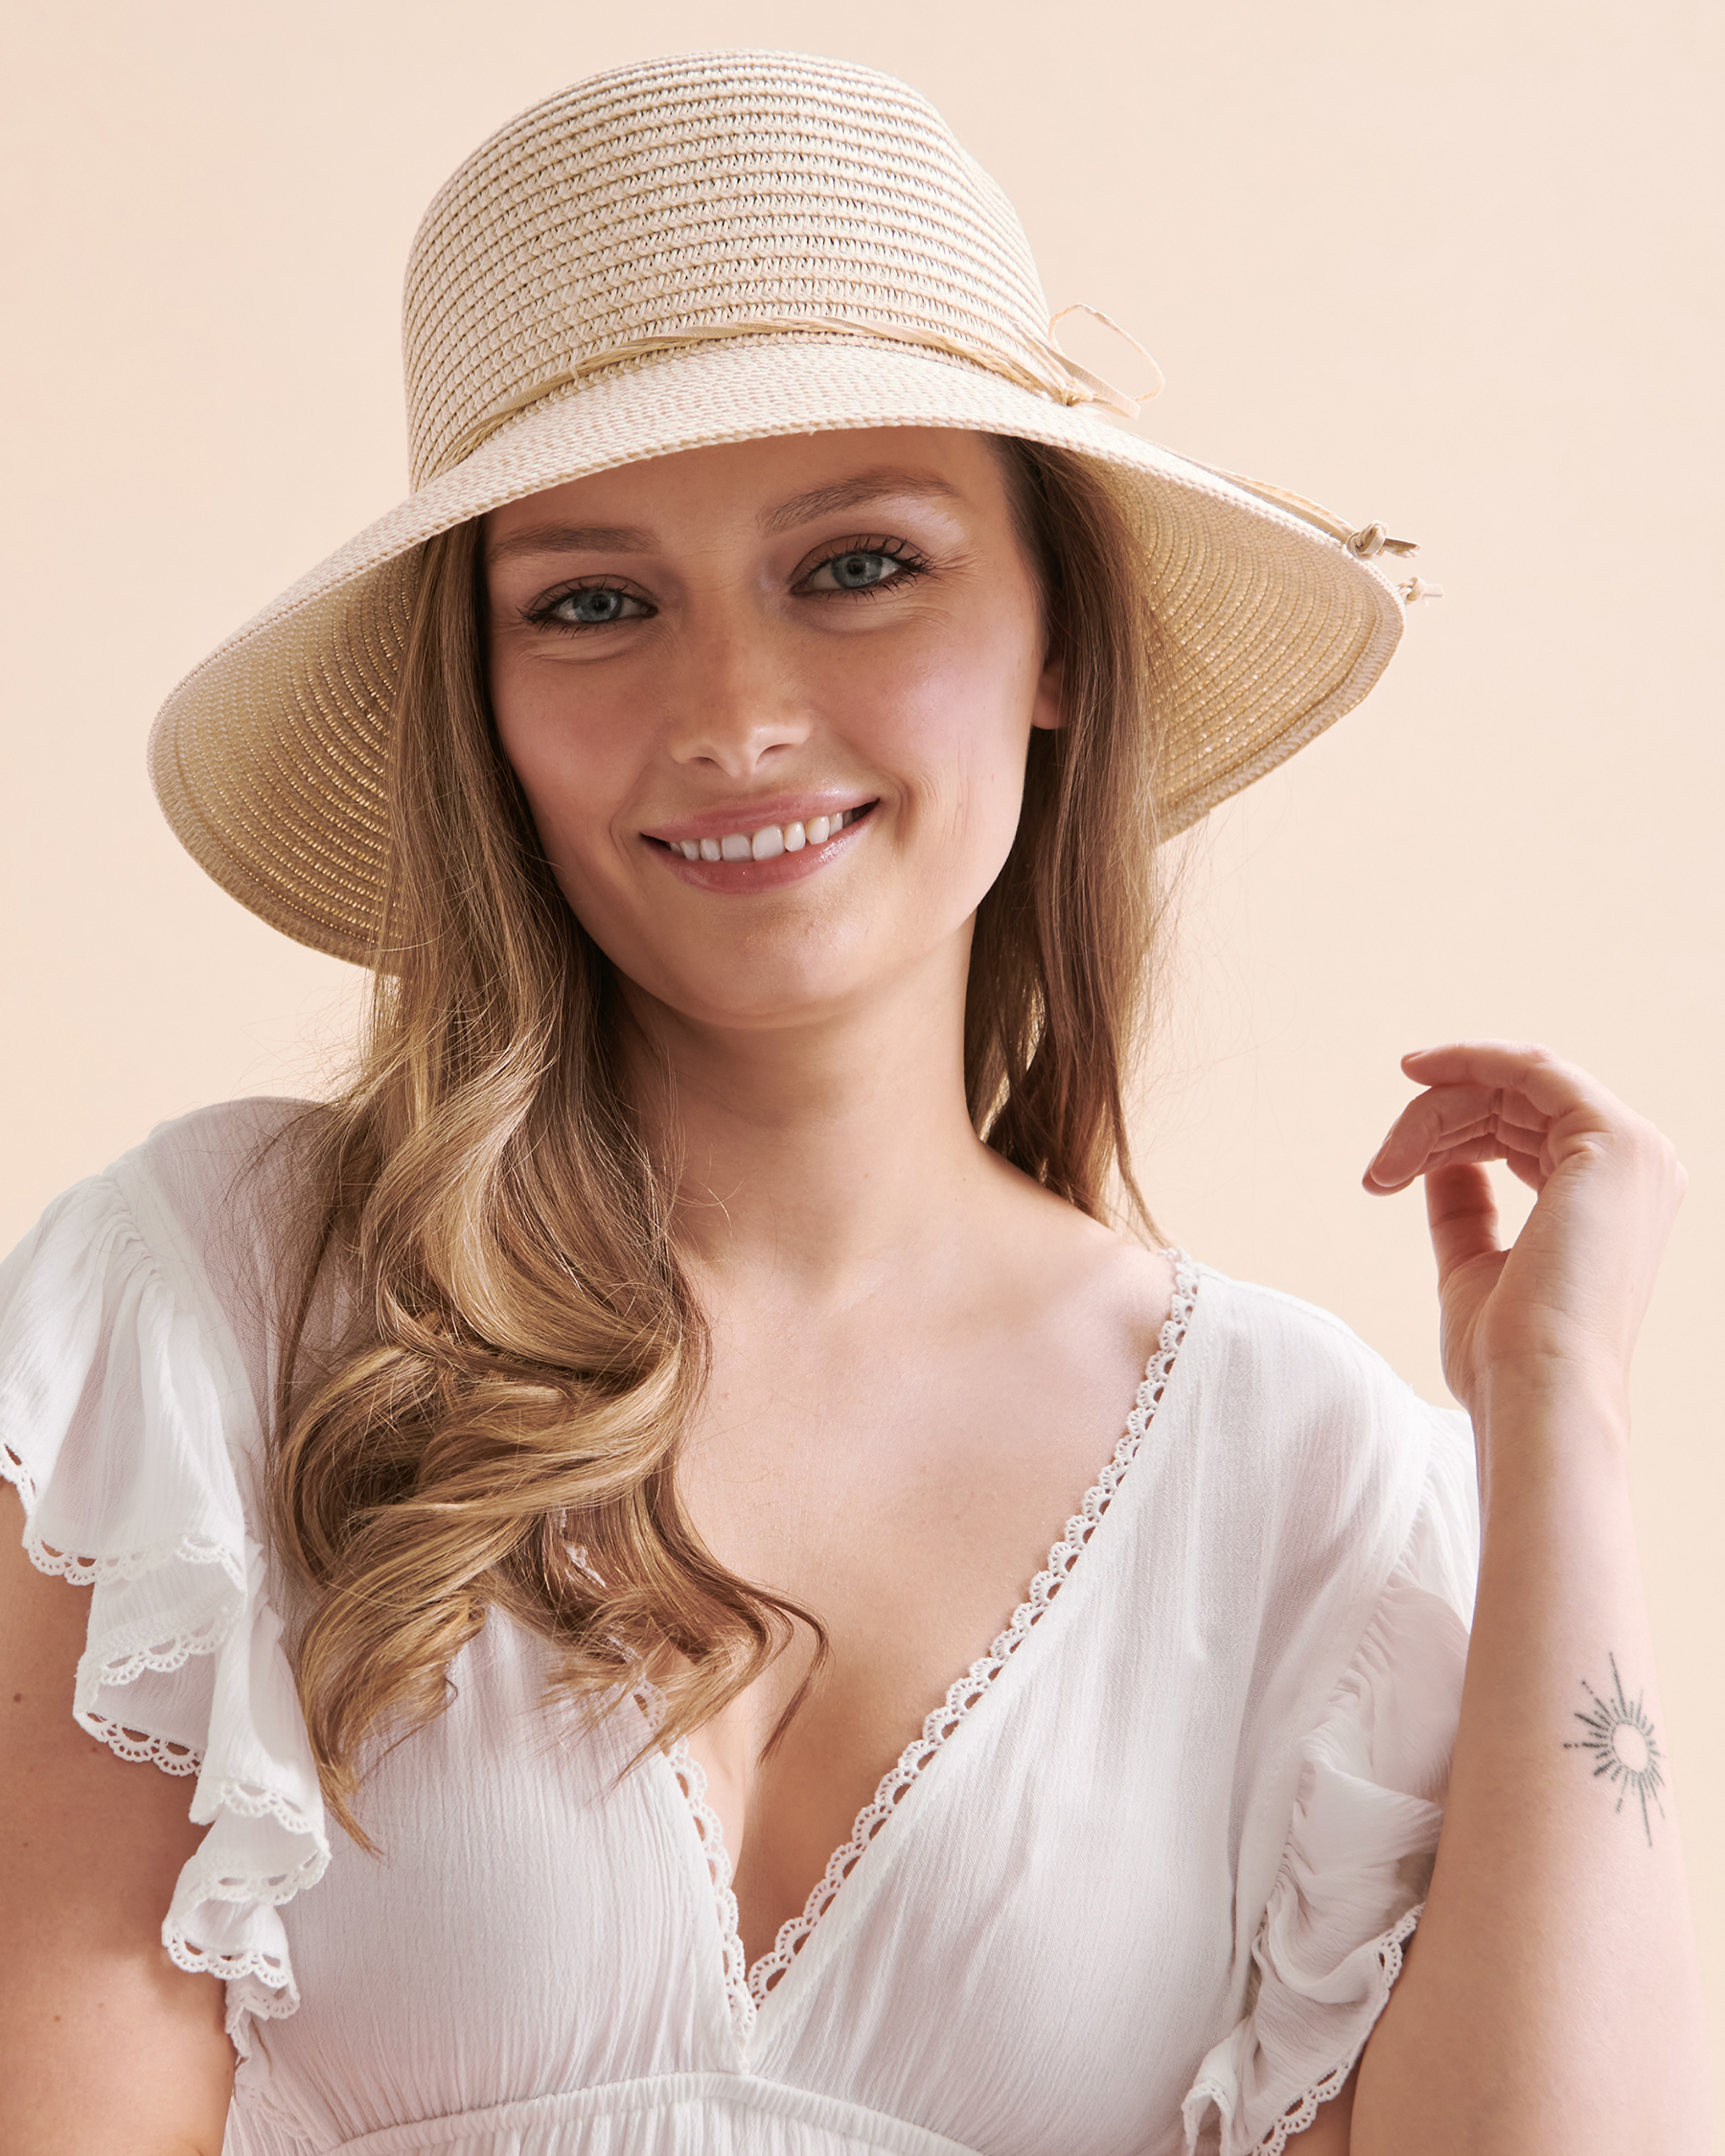 Women's hats from popular brands